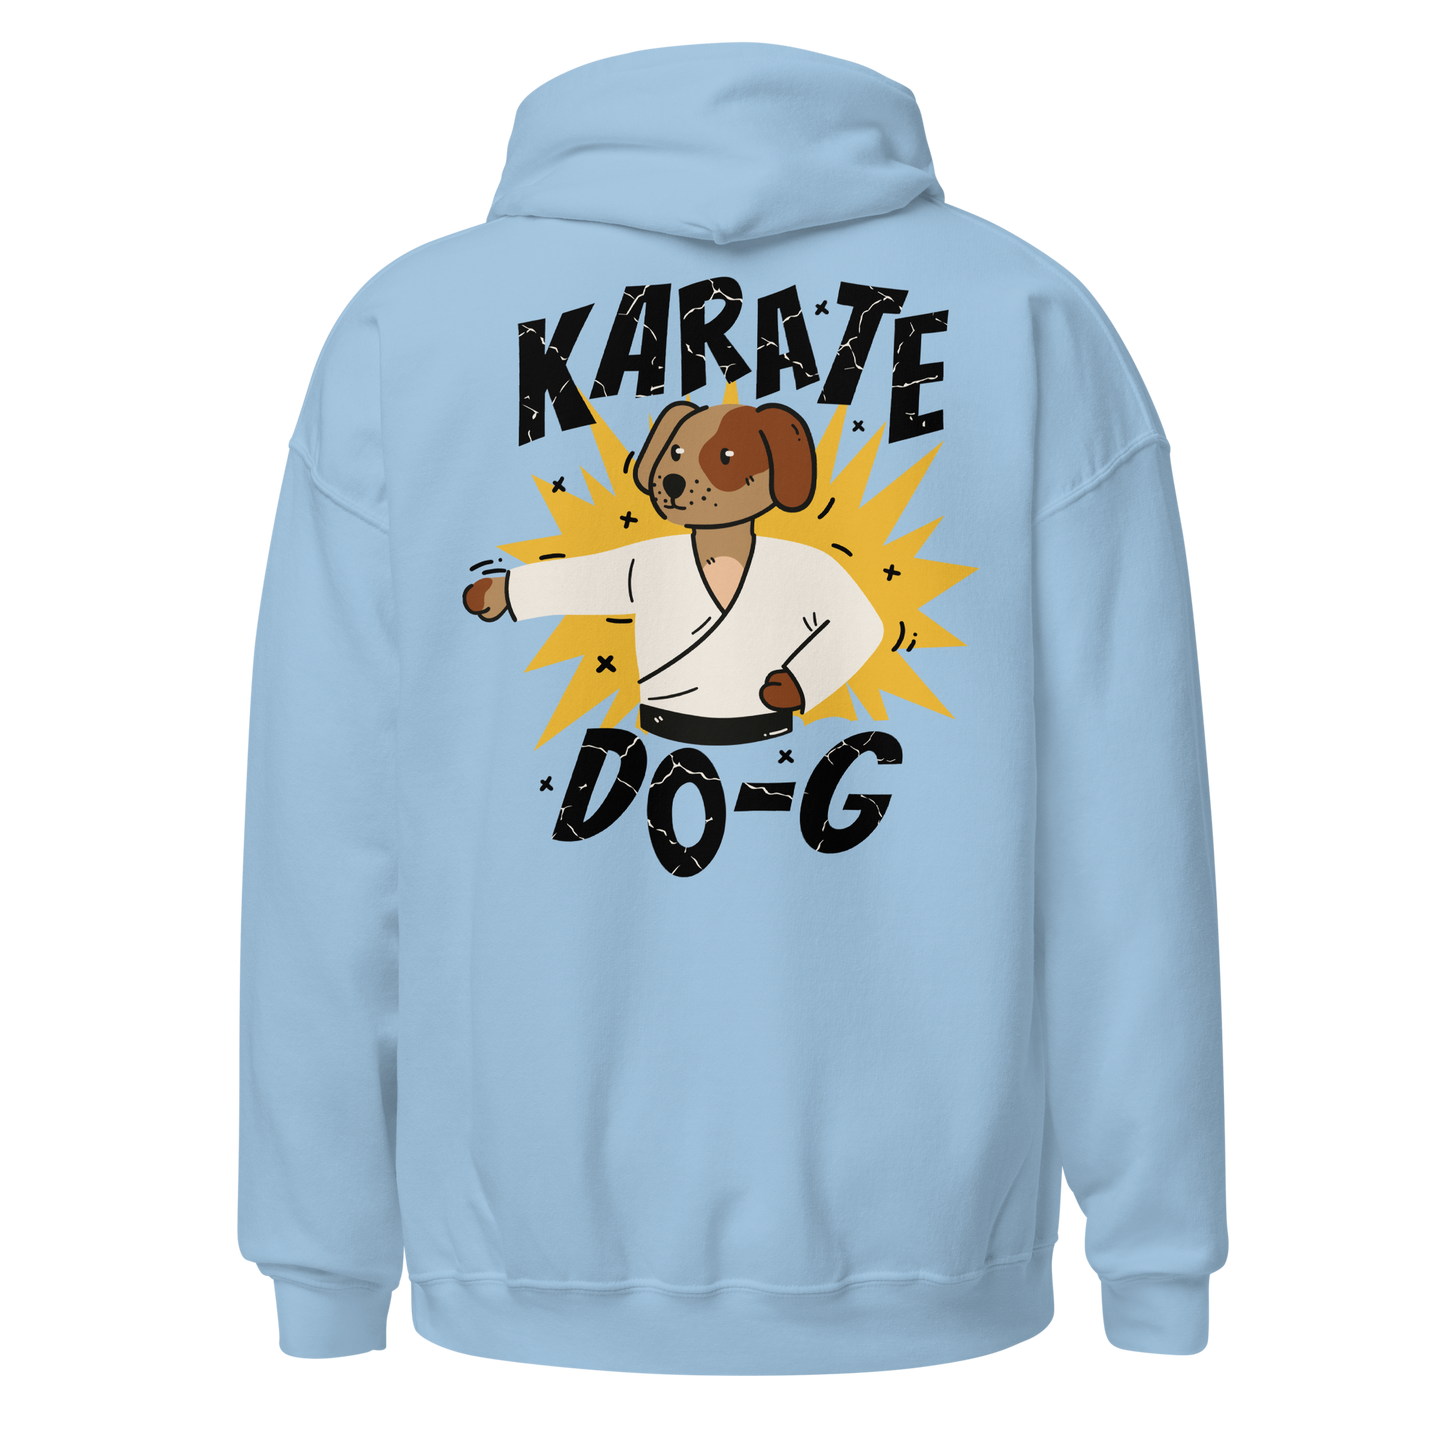 Karate do-g dog | Unisex Hoodie - F&B